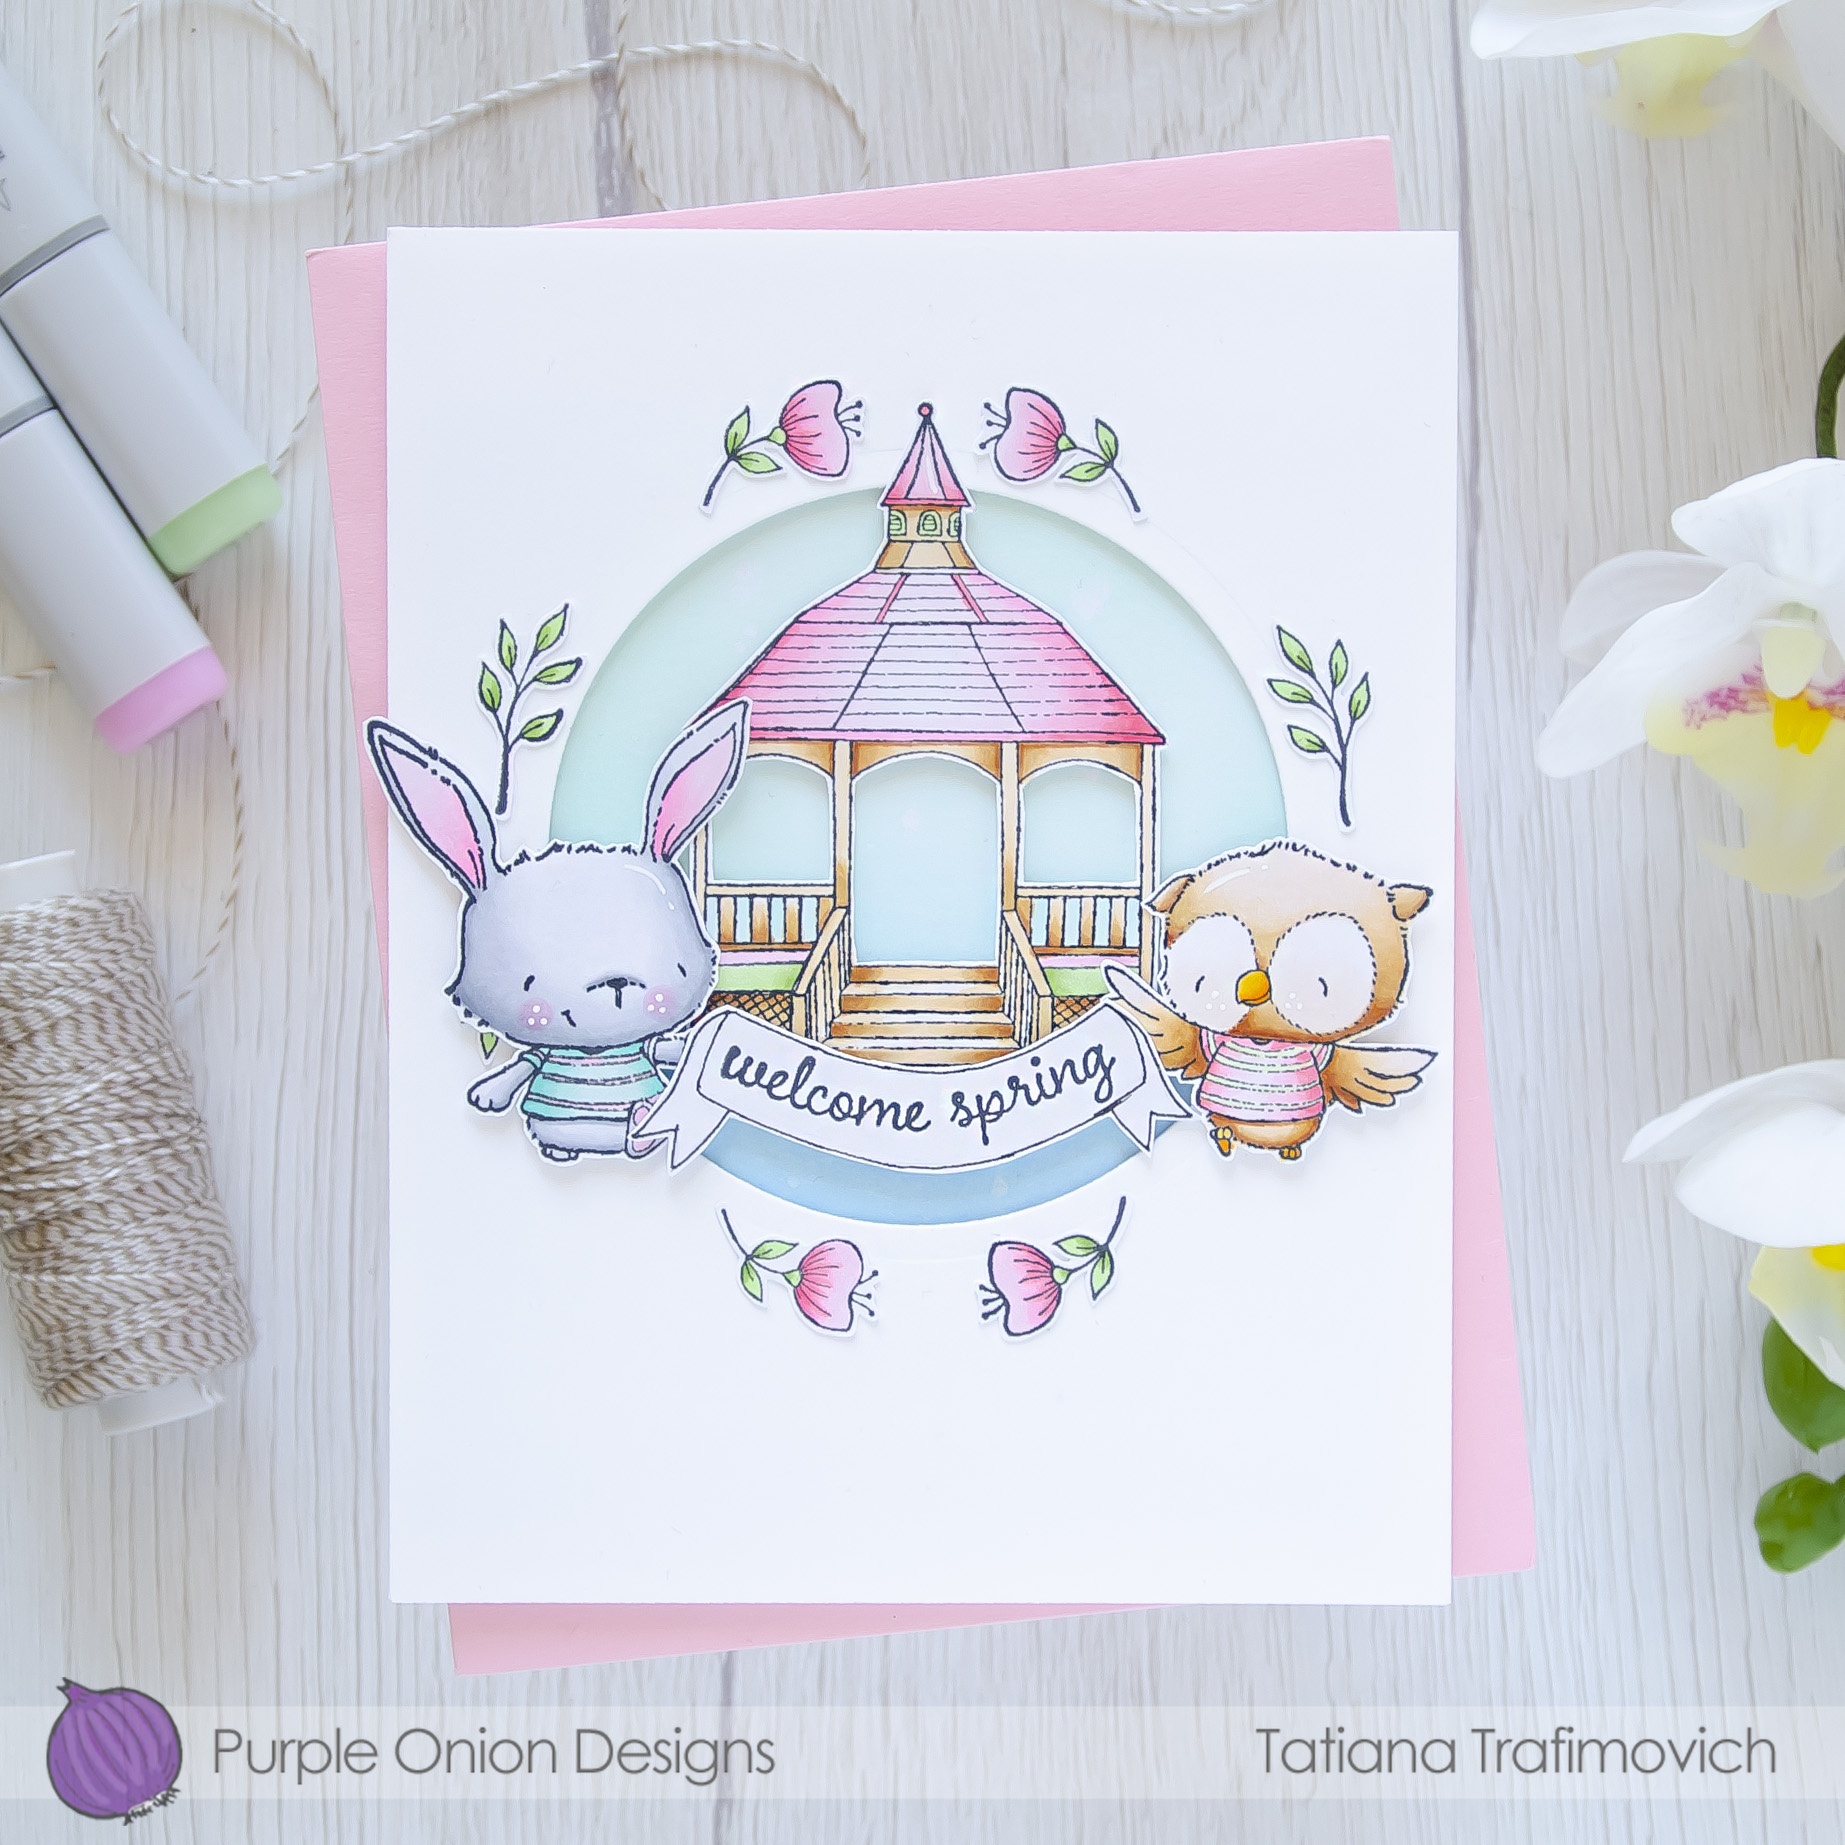 Welcome Spring #handmade card by Tatiana Trafimovich #tatianacraftandart - stamps by Purple Onion Designs